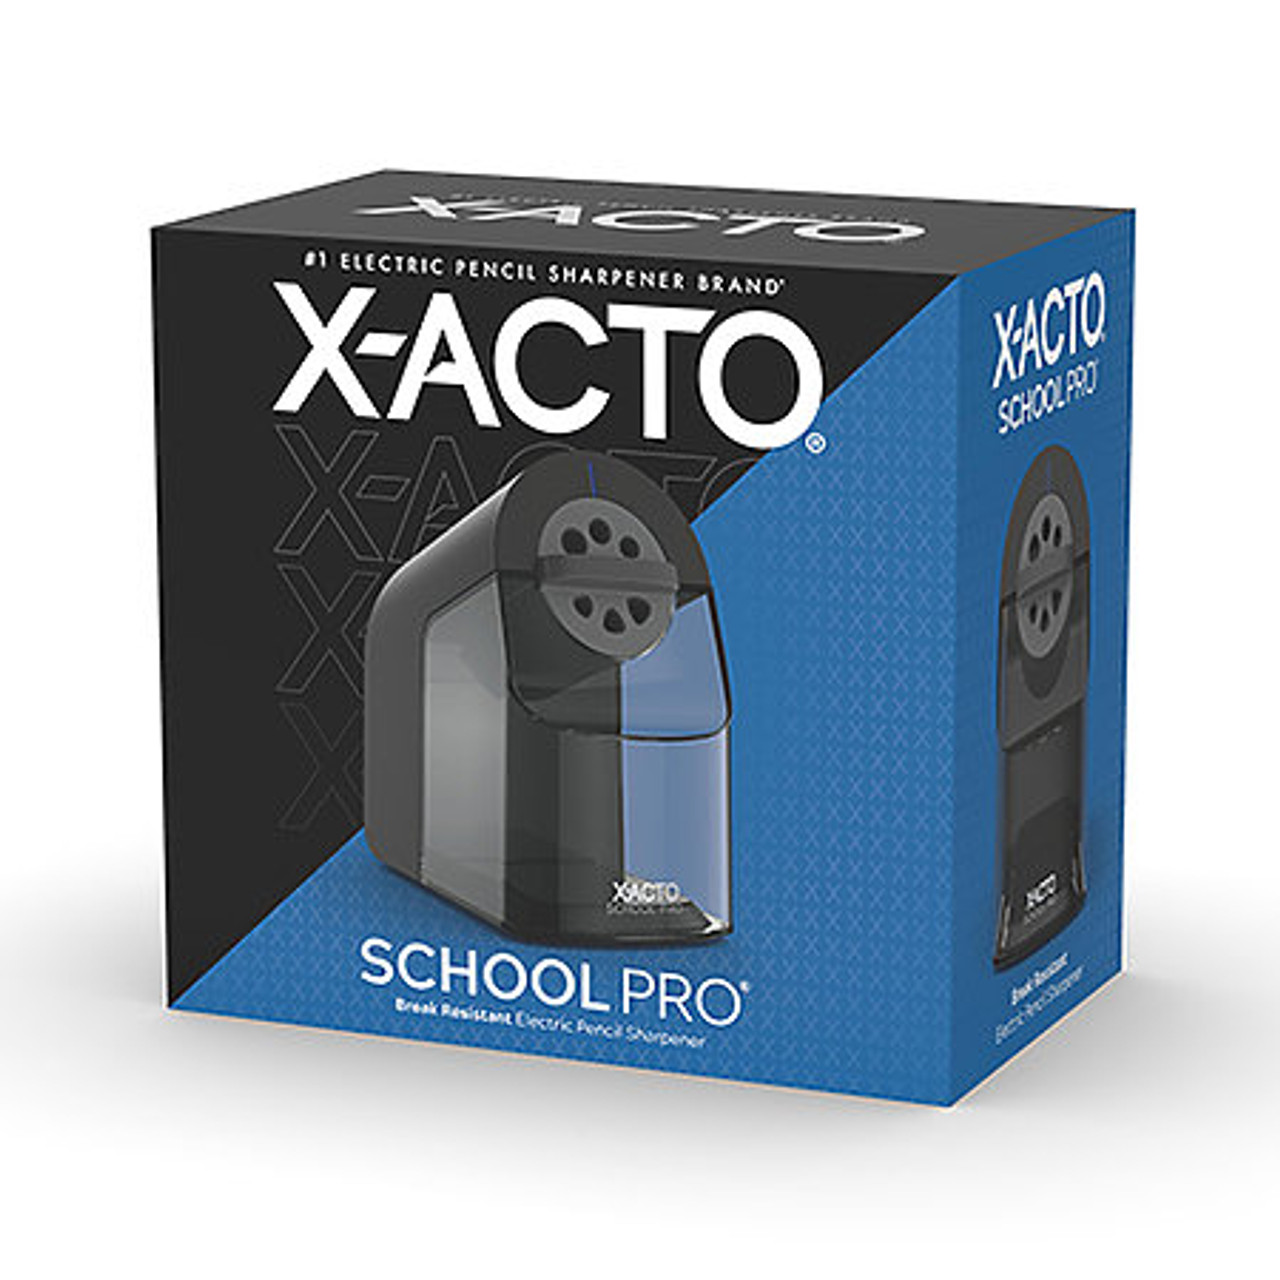 X-Acto School Pro Electric Pencil Sharpener image